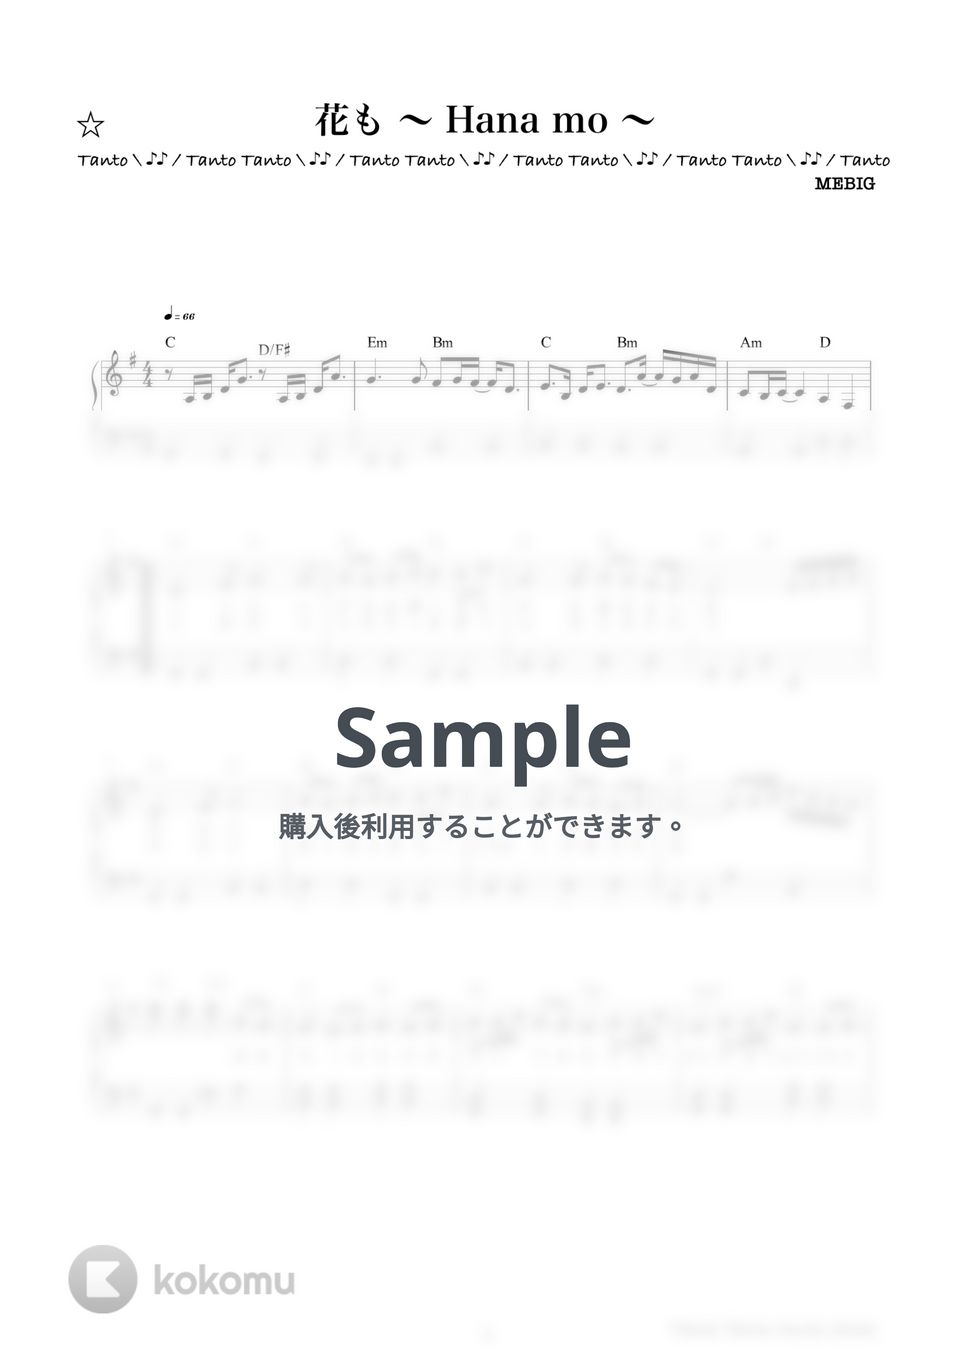 MEBIG - 花も 〜 Hana mo 〜 (🌺 Piano Solo in G) by Tanto Tanto